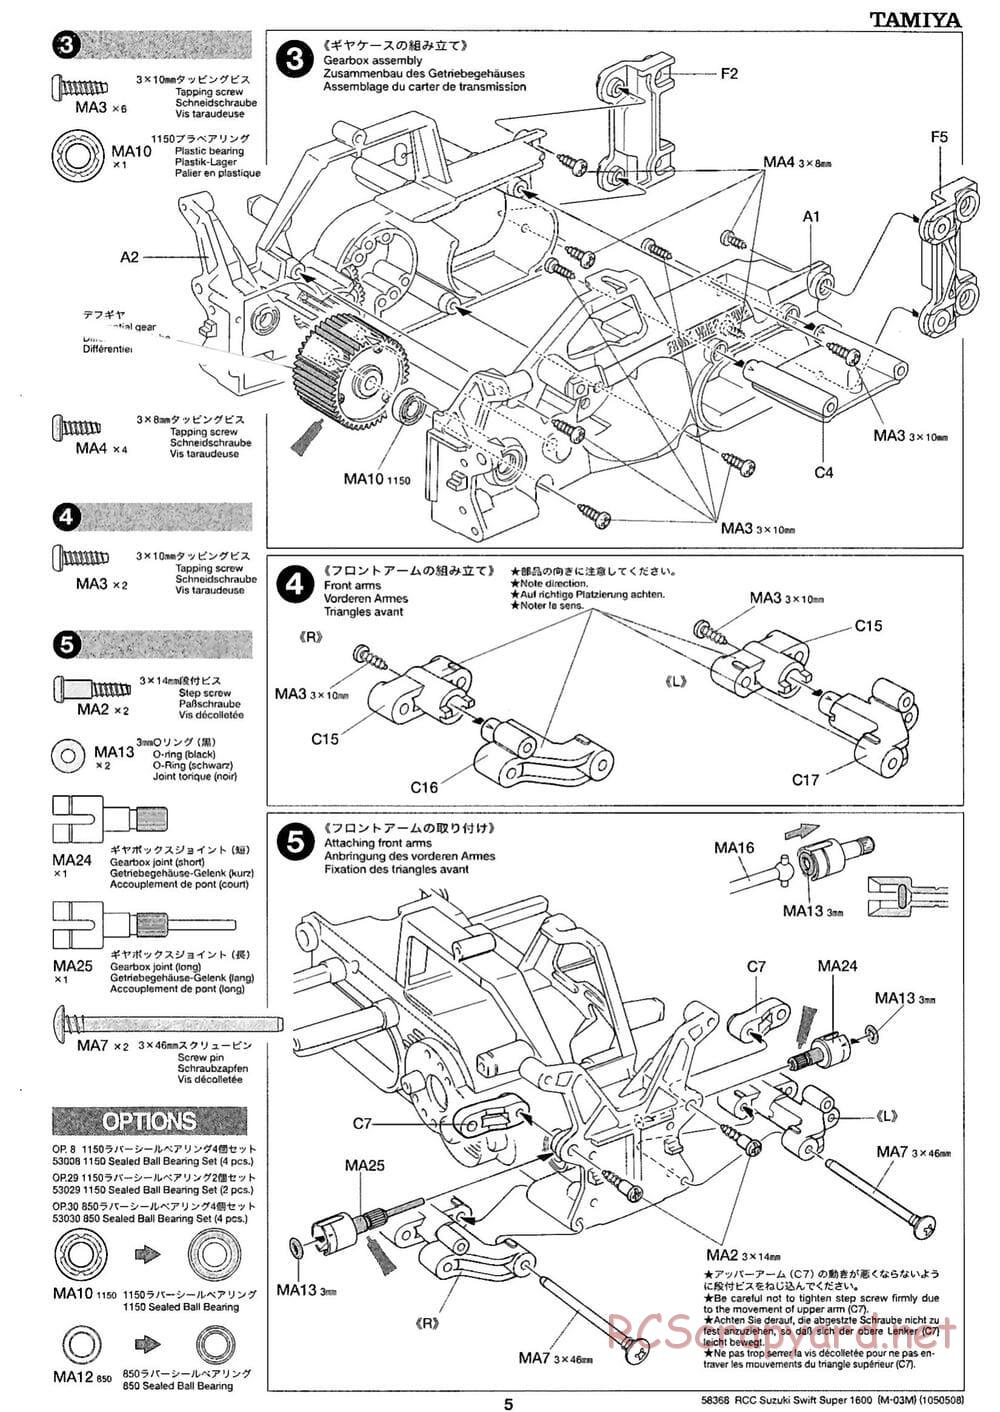 Tamiya - Suzuki Swift Super 1600 - M03M Chassis - Manual - Page 5